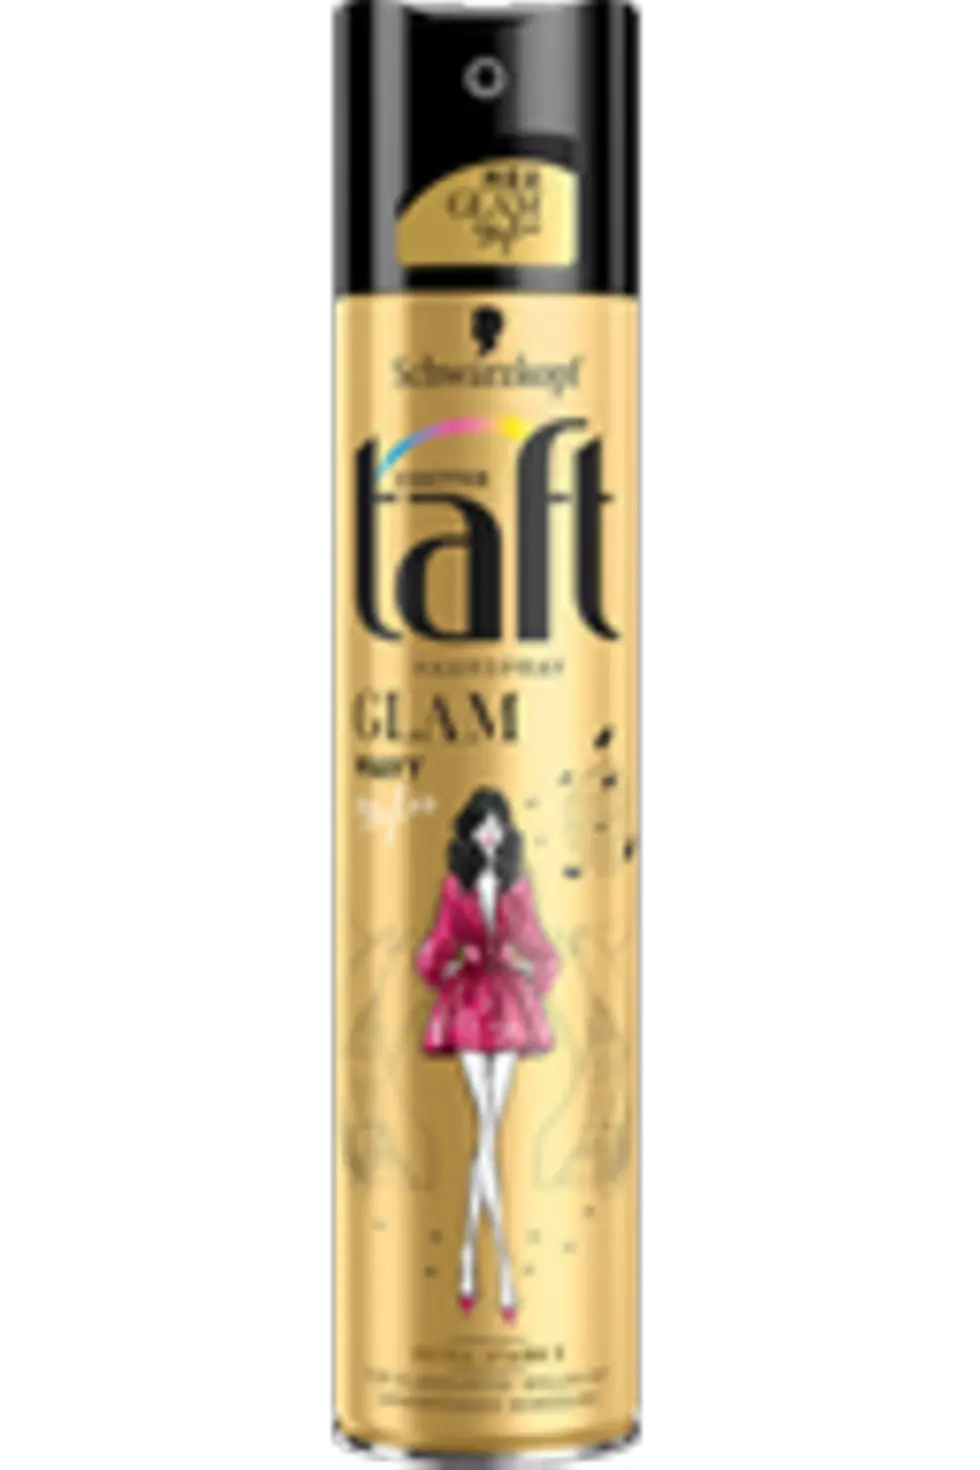 Taft Glam Styles „Wavy“